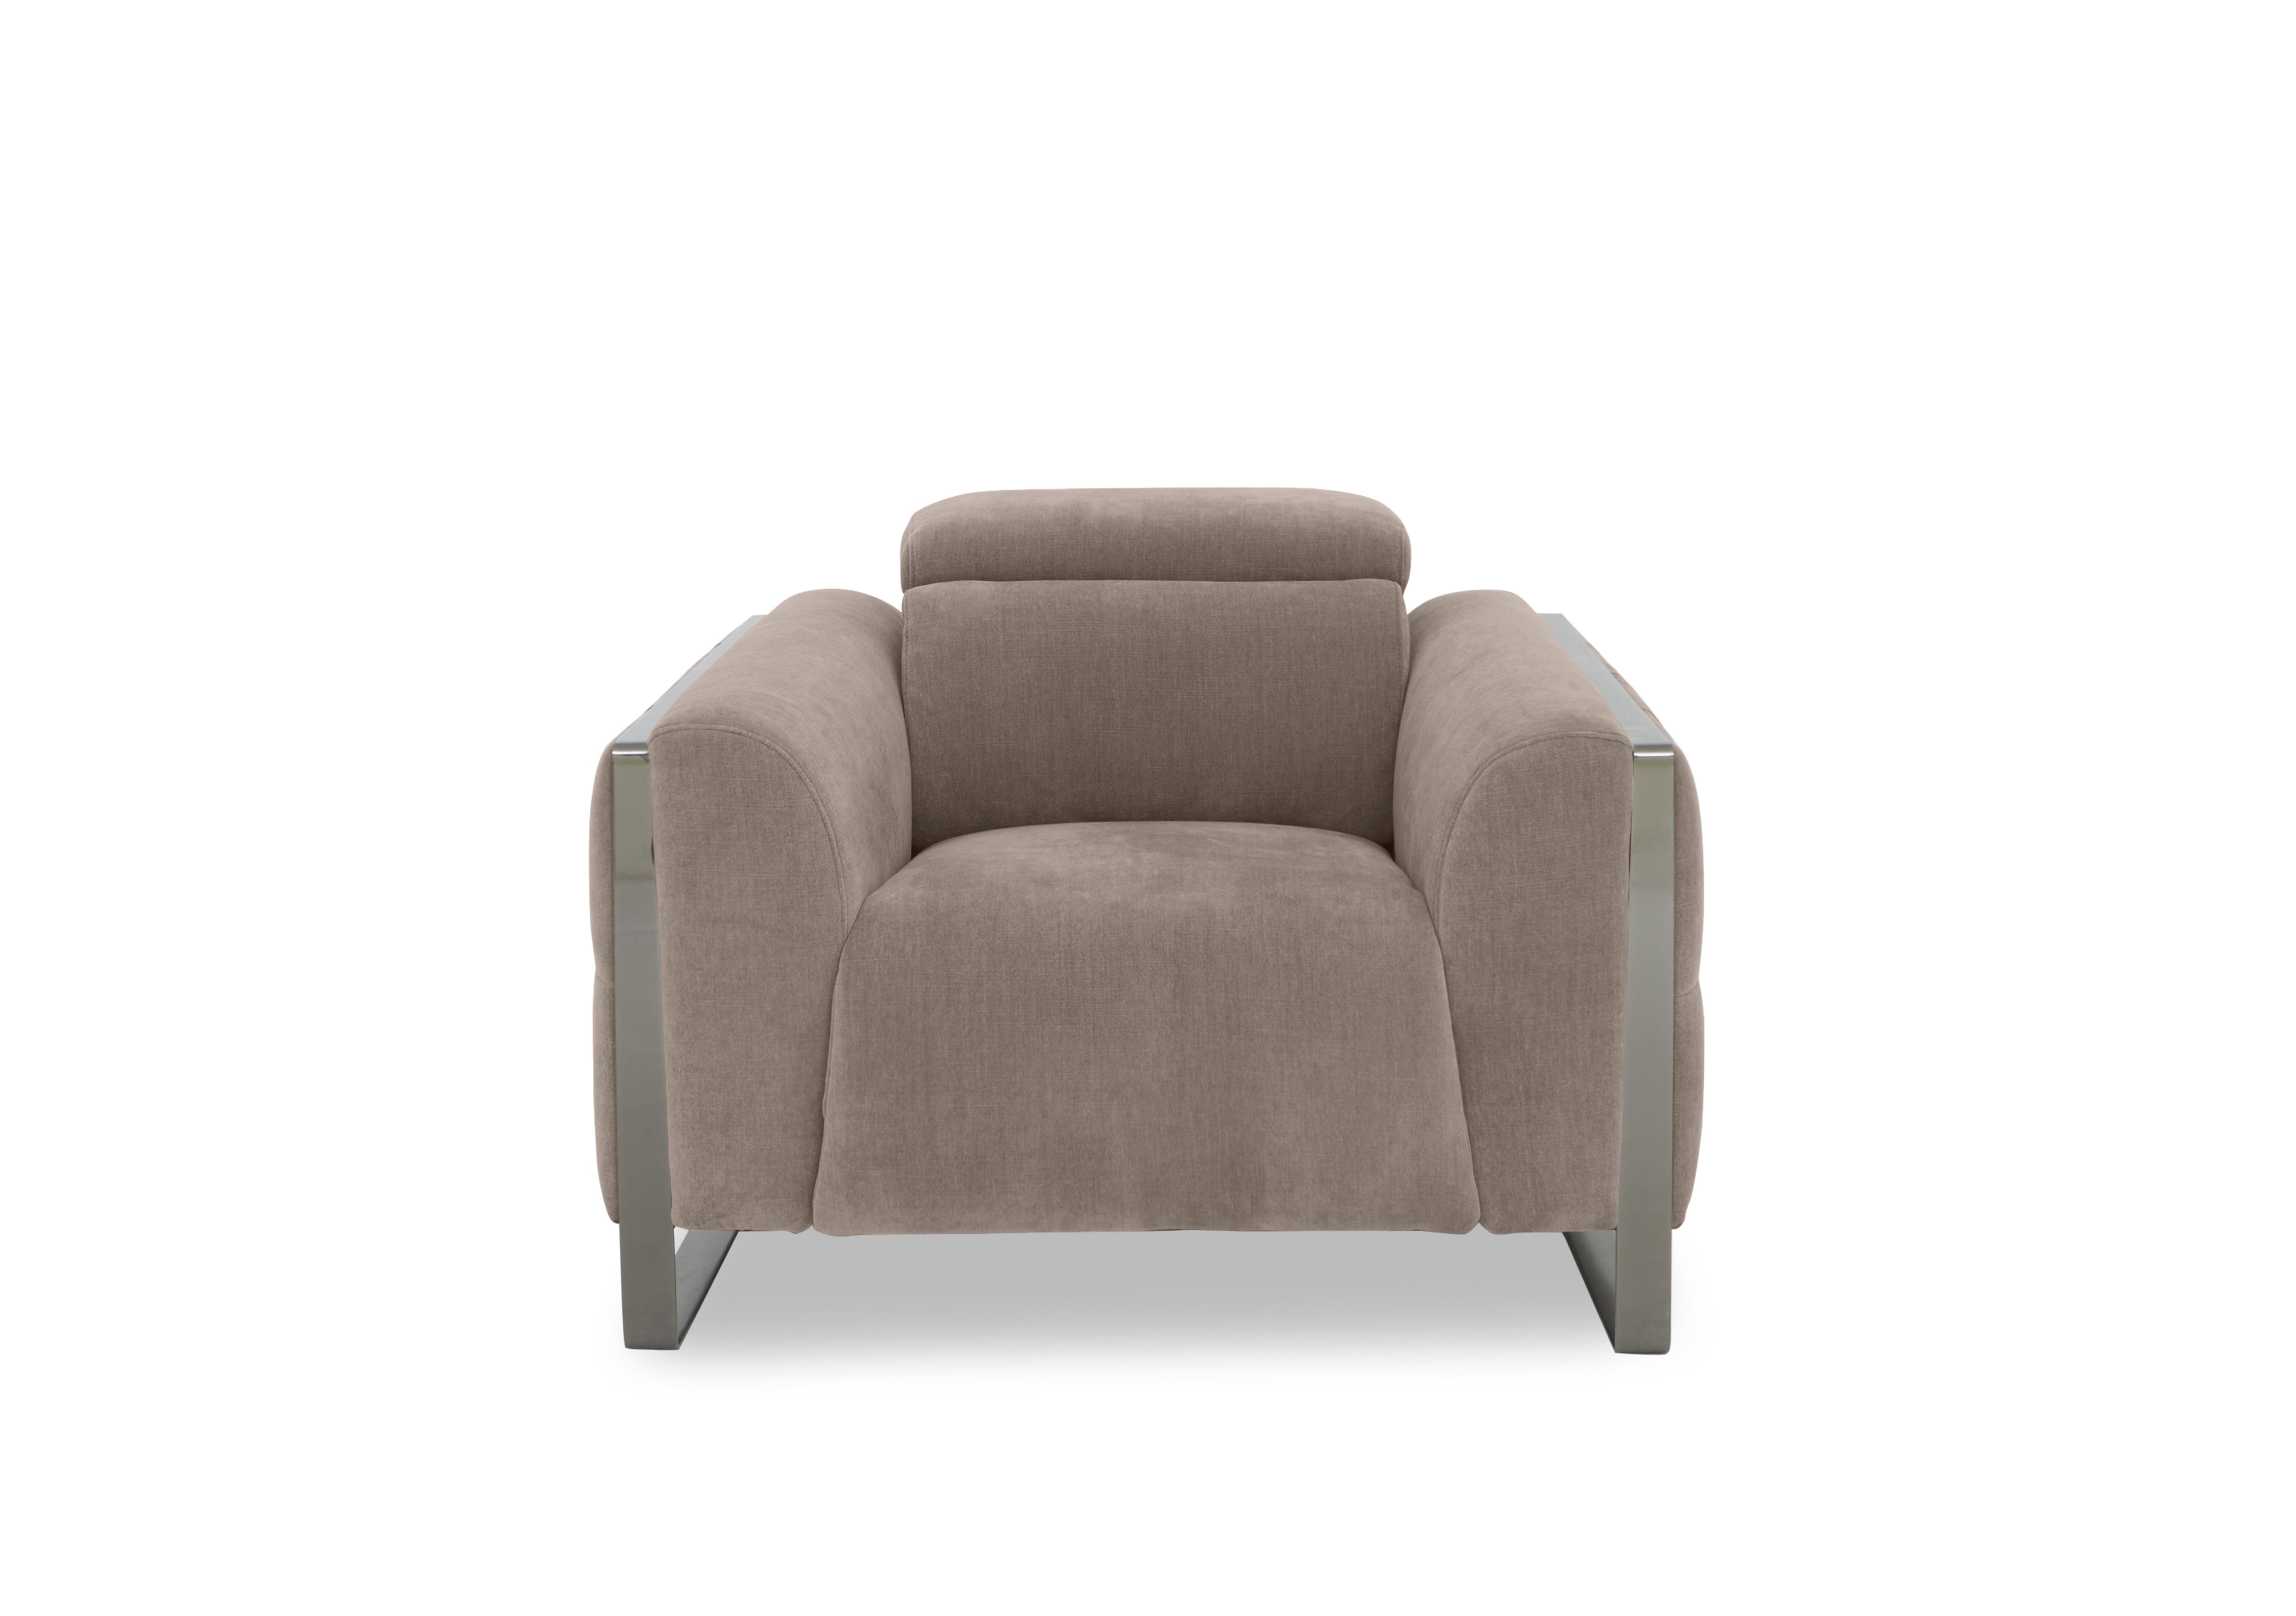 Gisella Fabric Chair in Manhattan Nutmeg 58005 on Furniture Village